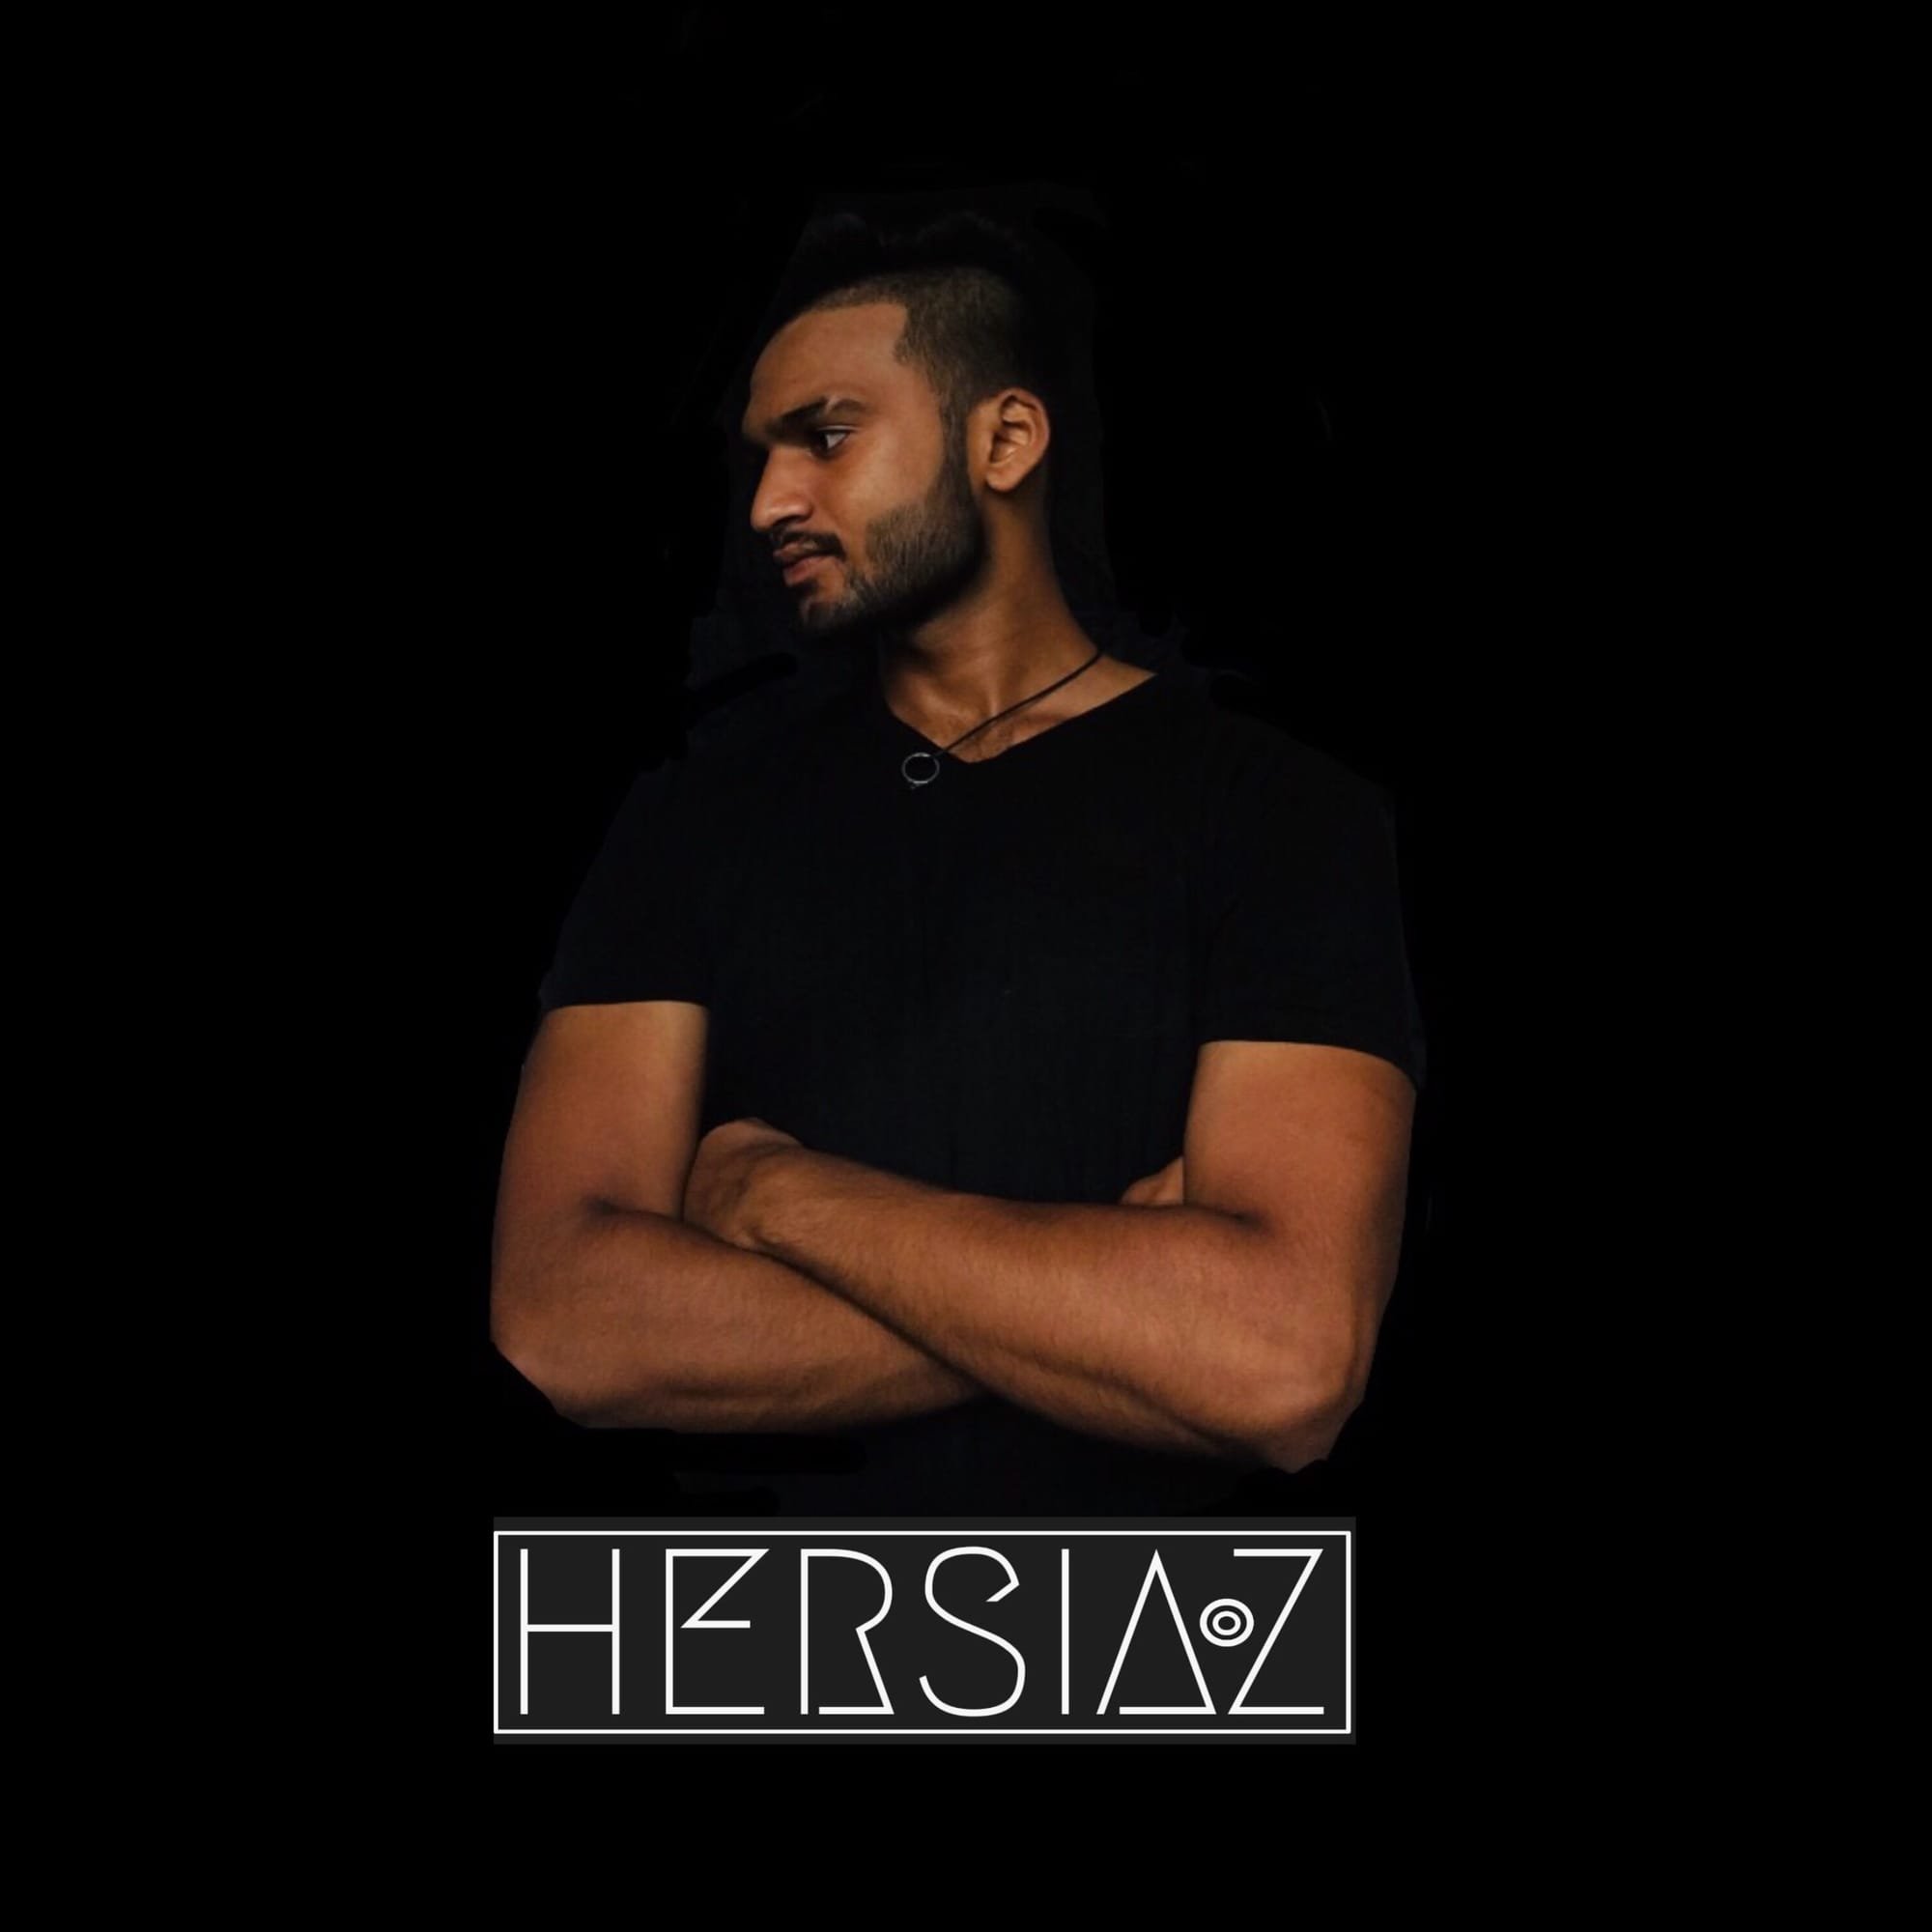 Hersiaz Hazi starts new show Spectacular episode 1.